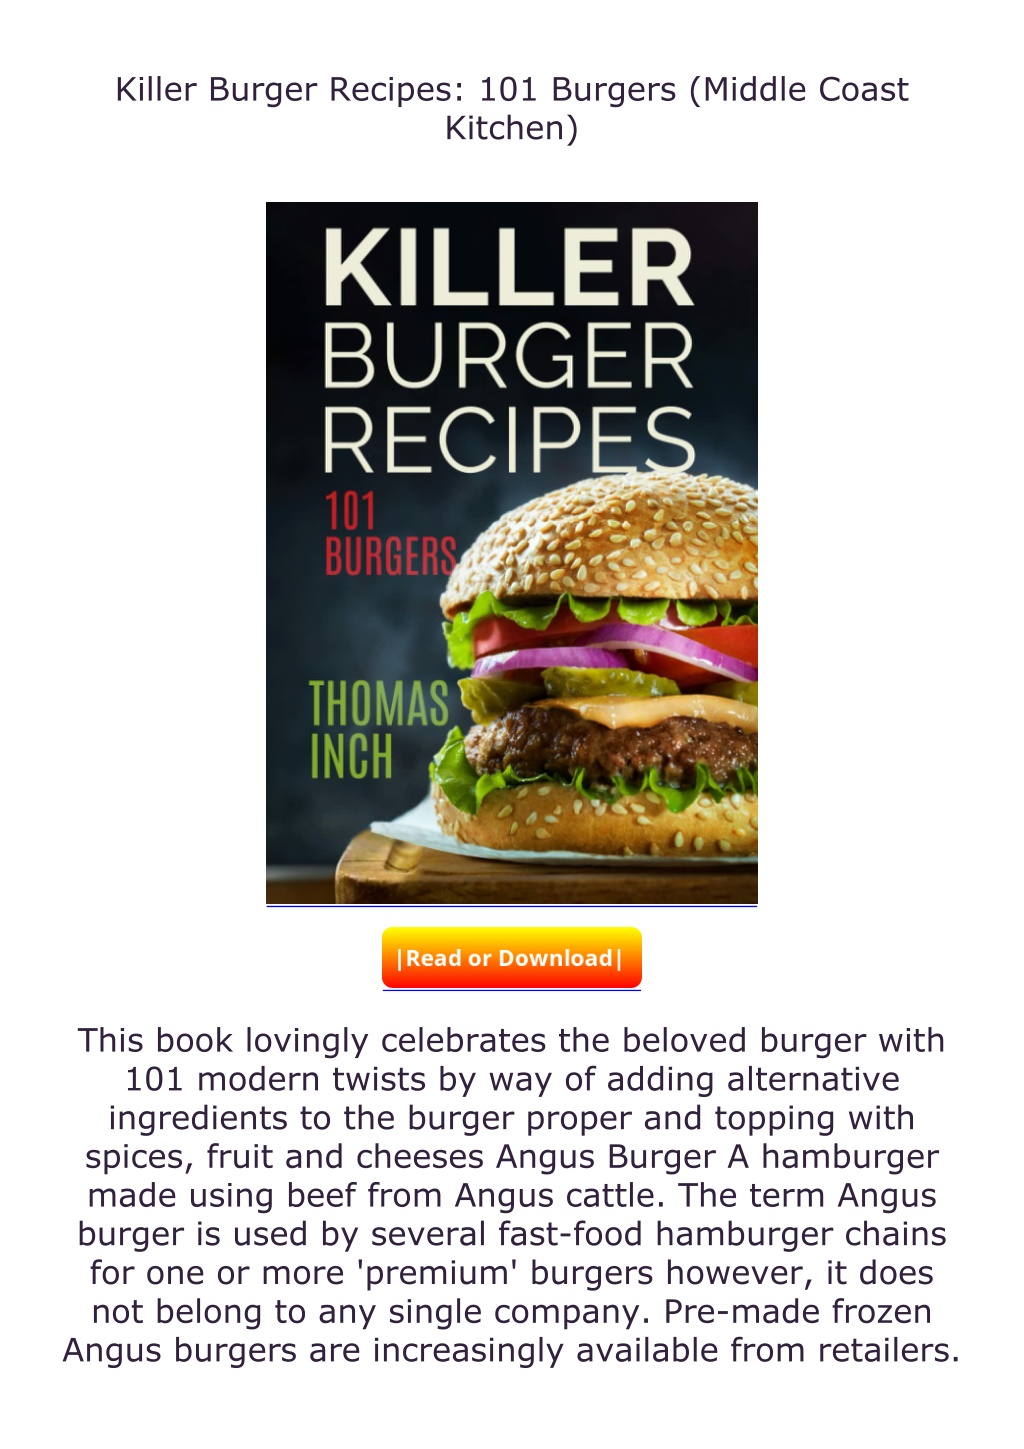 PPT - Killer-Burger-Recipes-101-Burgers-Middle-Coast-Kitchen PowerPoint ...